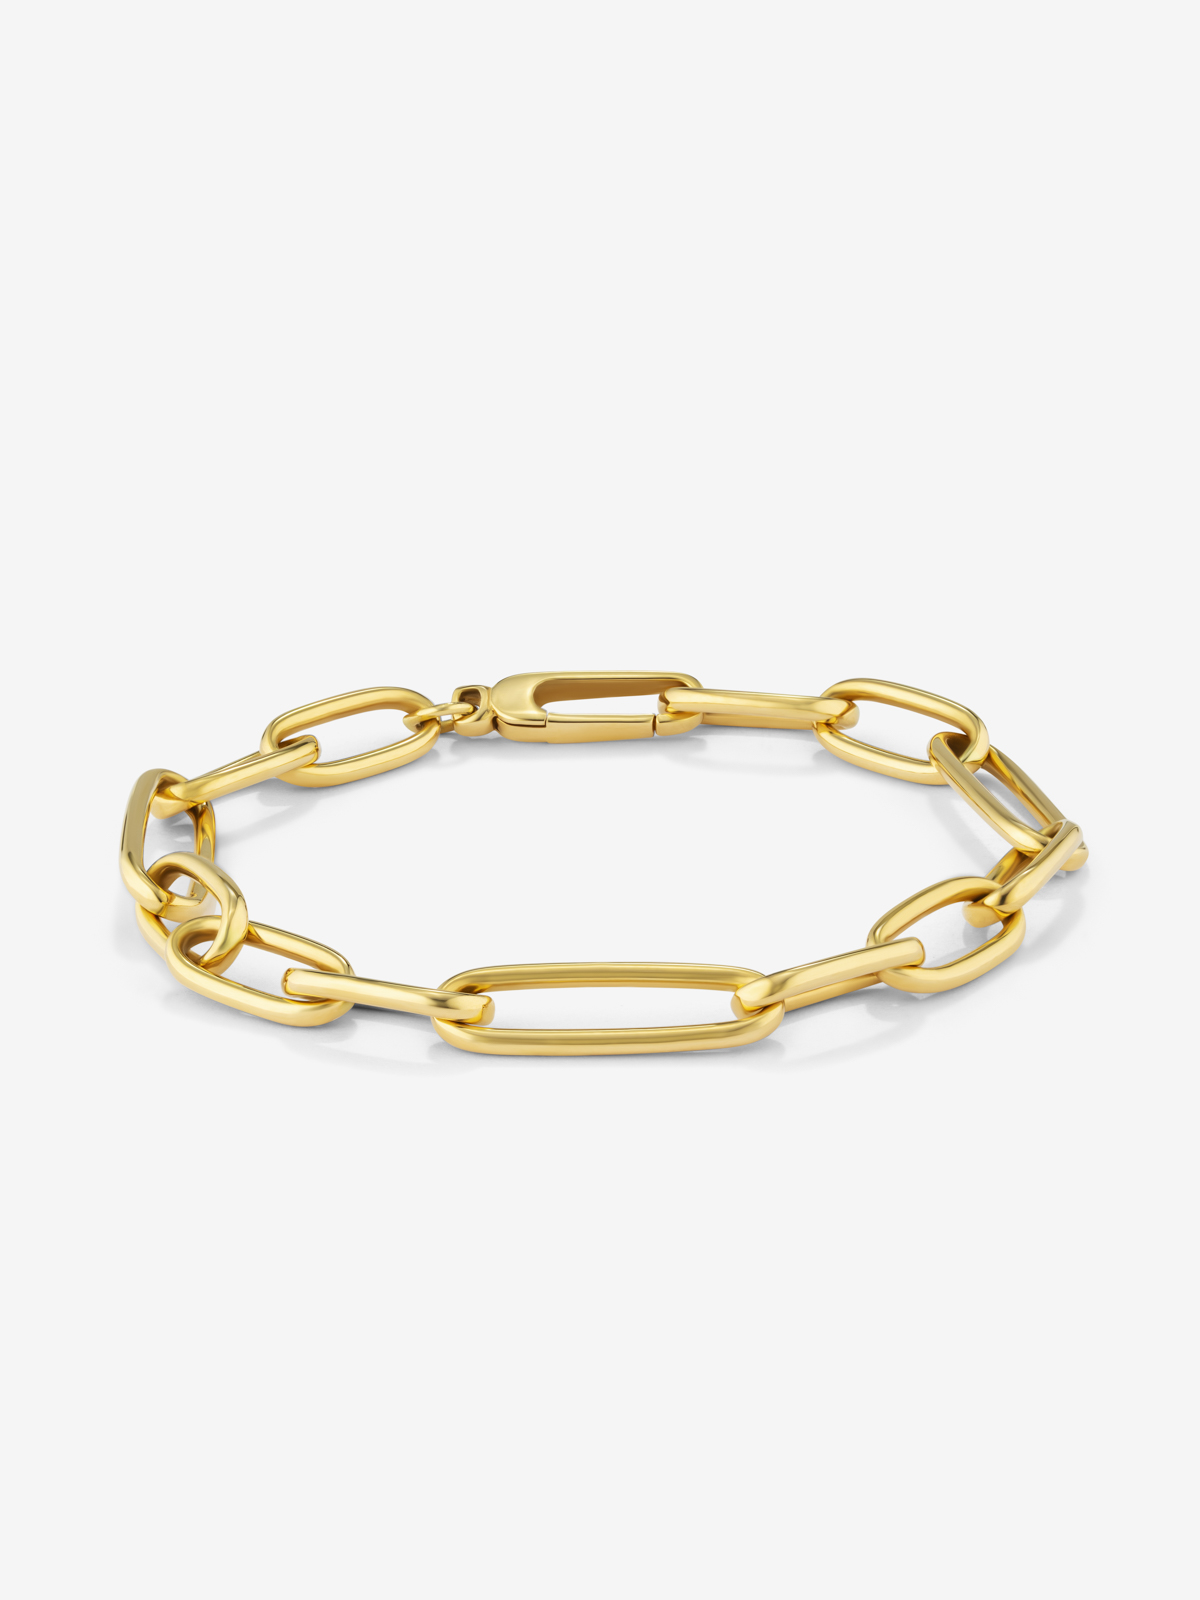 Medium link bracelet made of 18K yellow gold